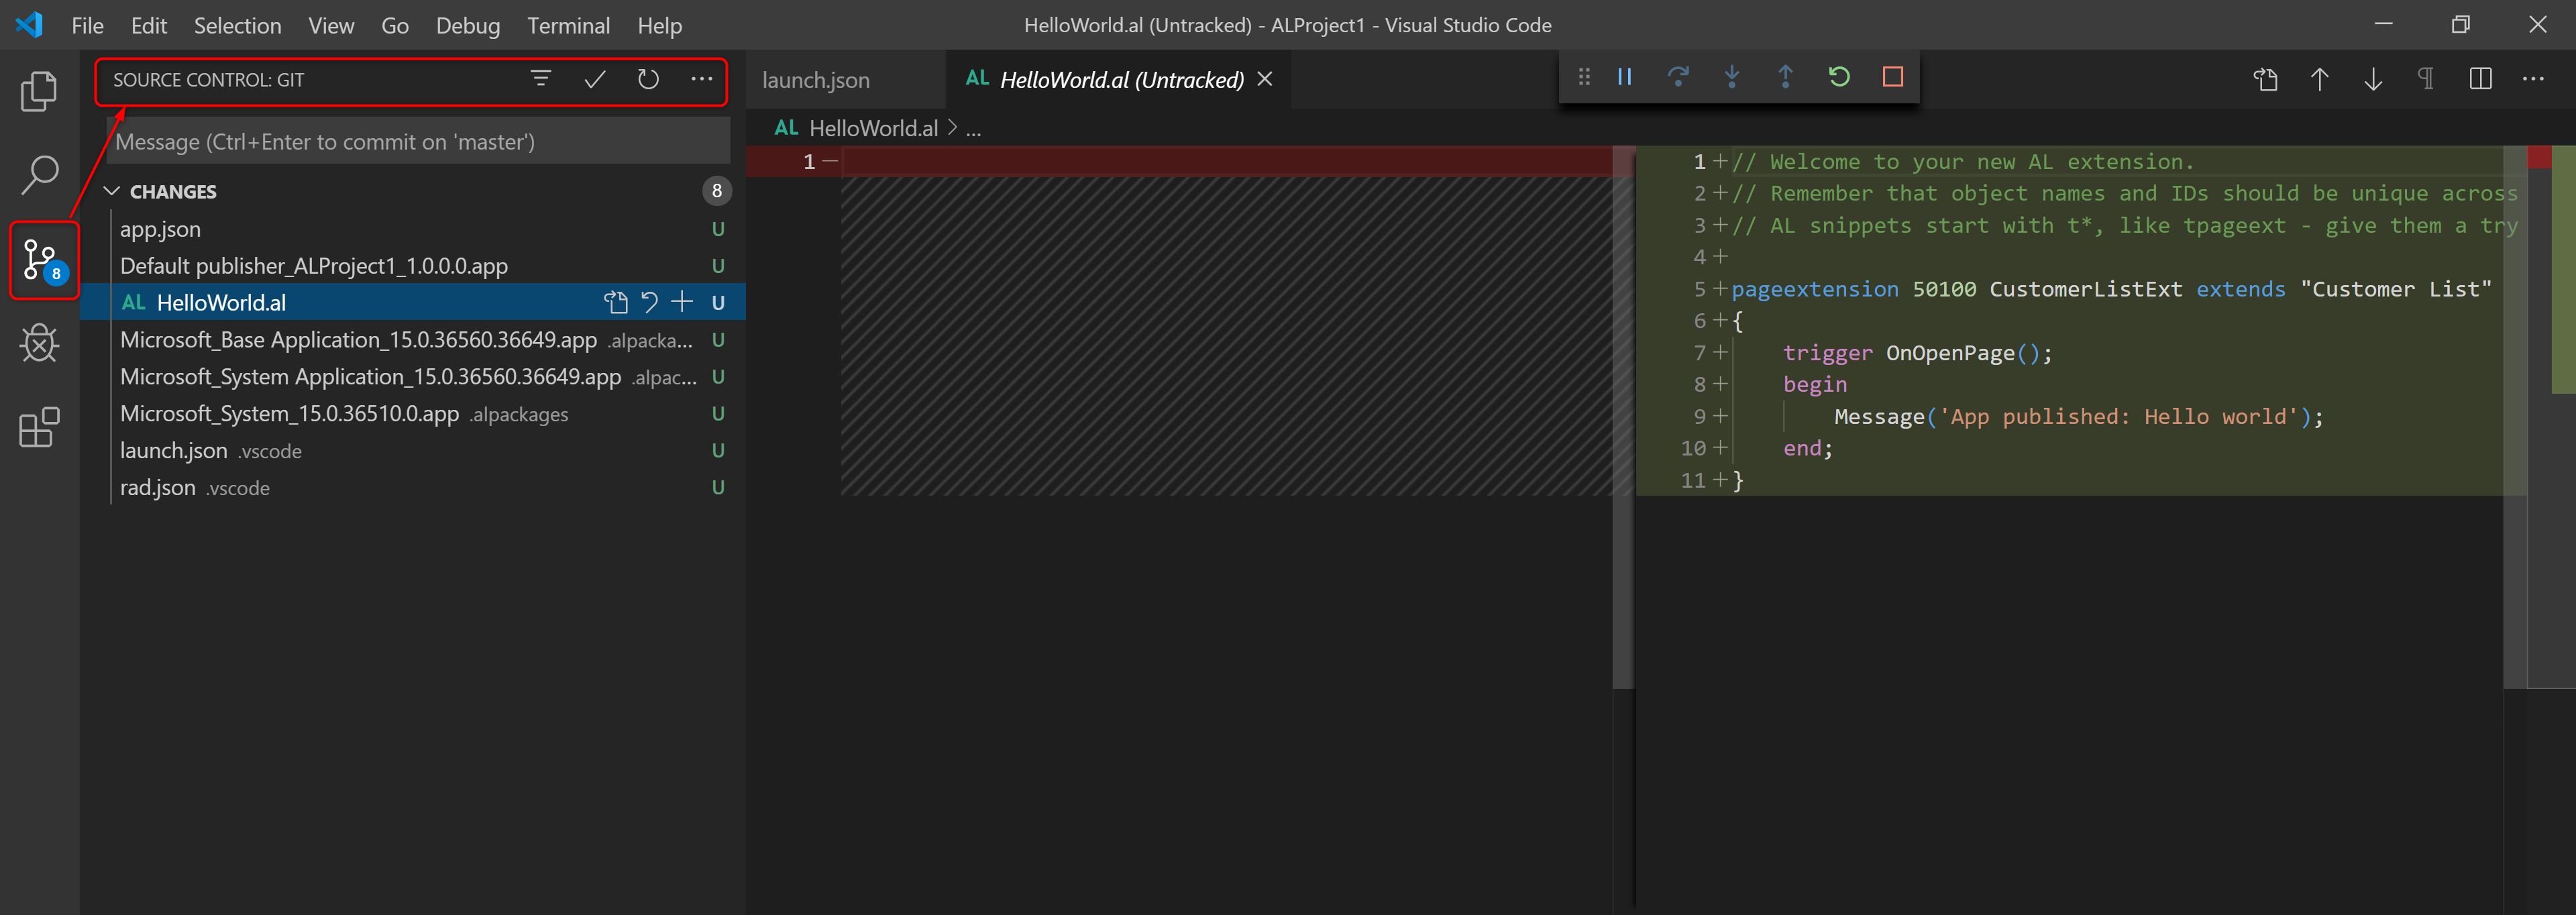 Visual Studio Code - Git repo - Source tracking